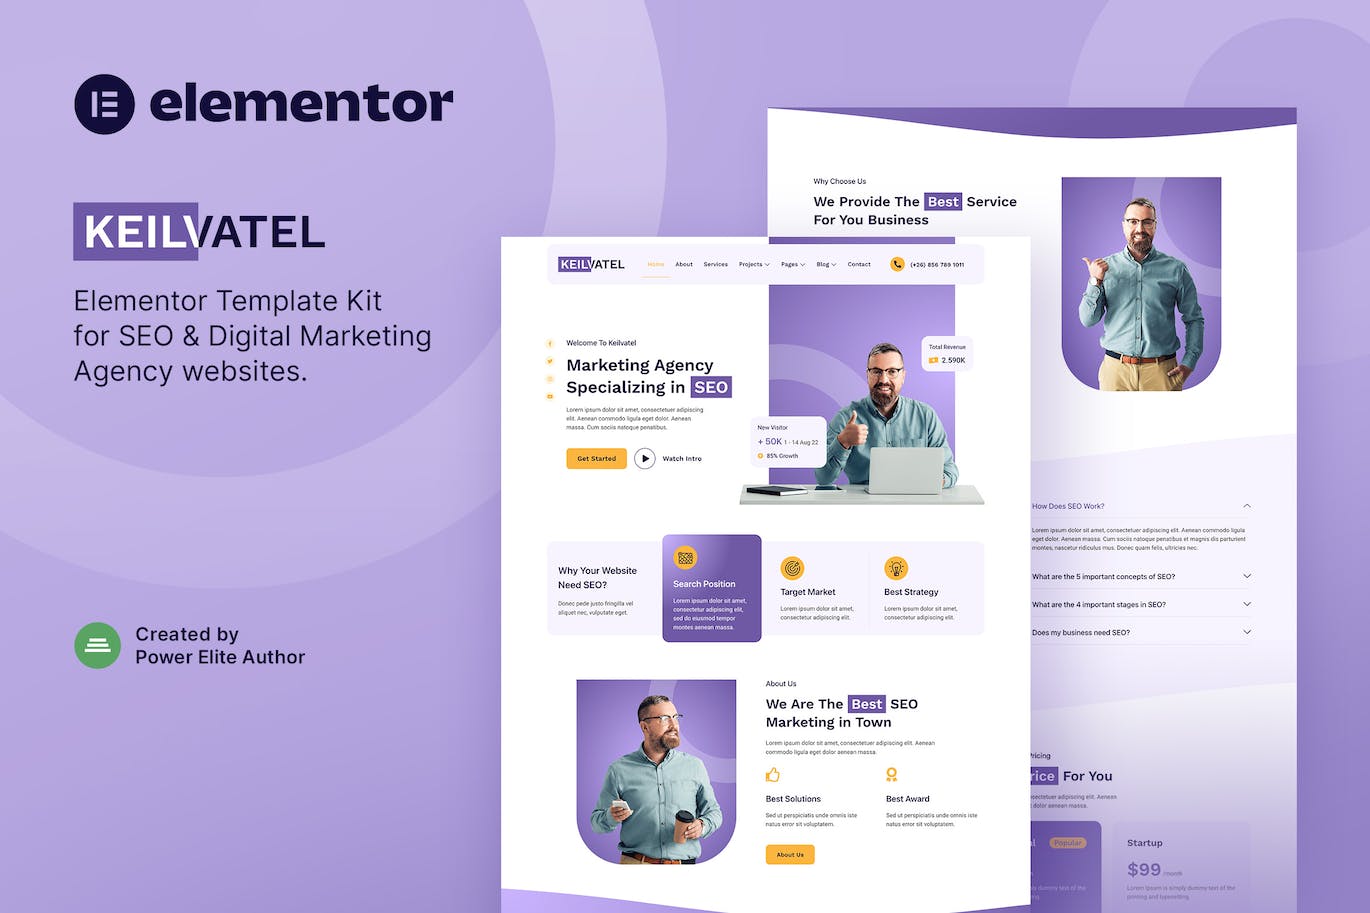 Keilvatel - SEO & Digital Marketing Agency Elementor Template Kit